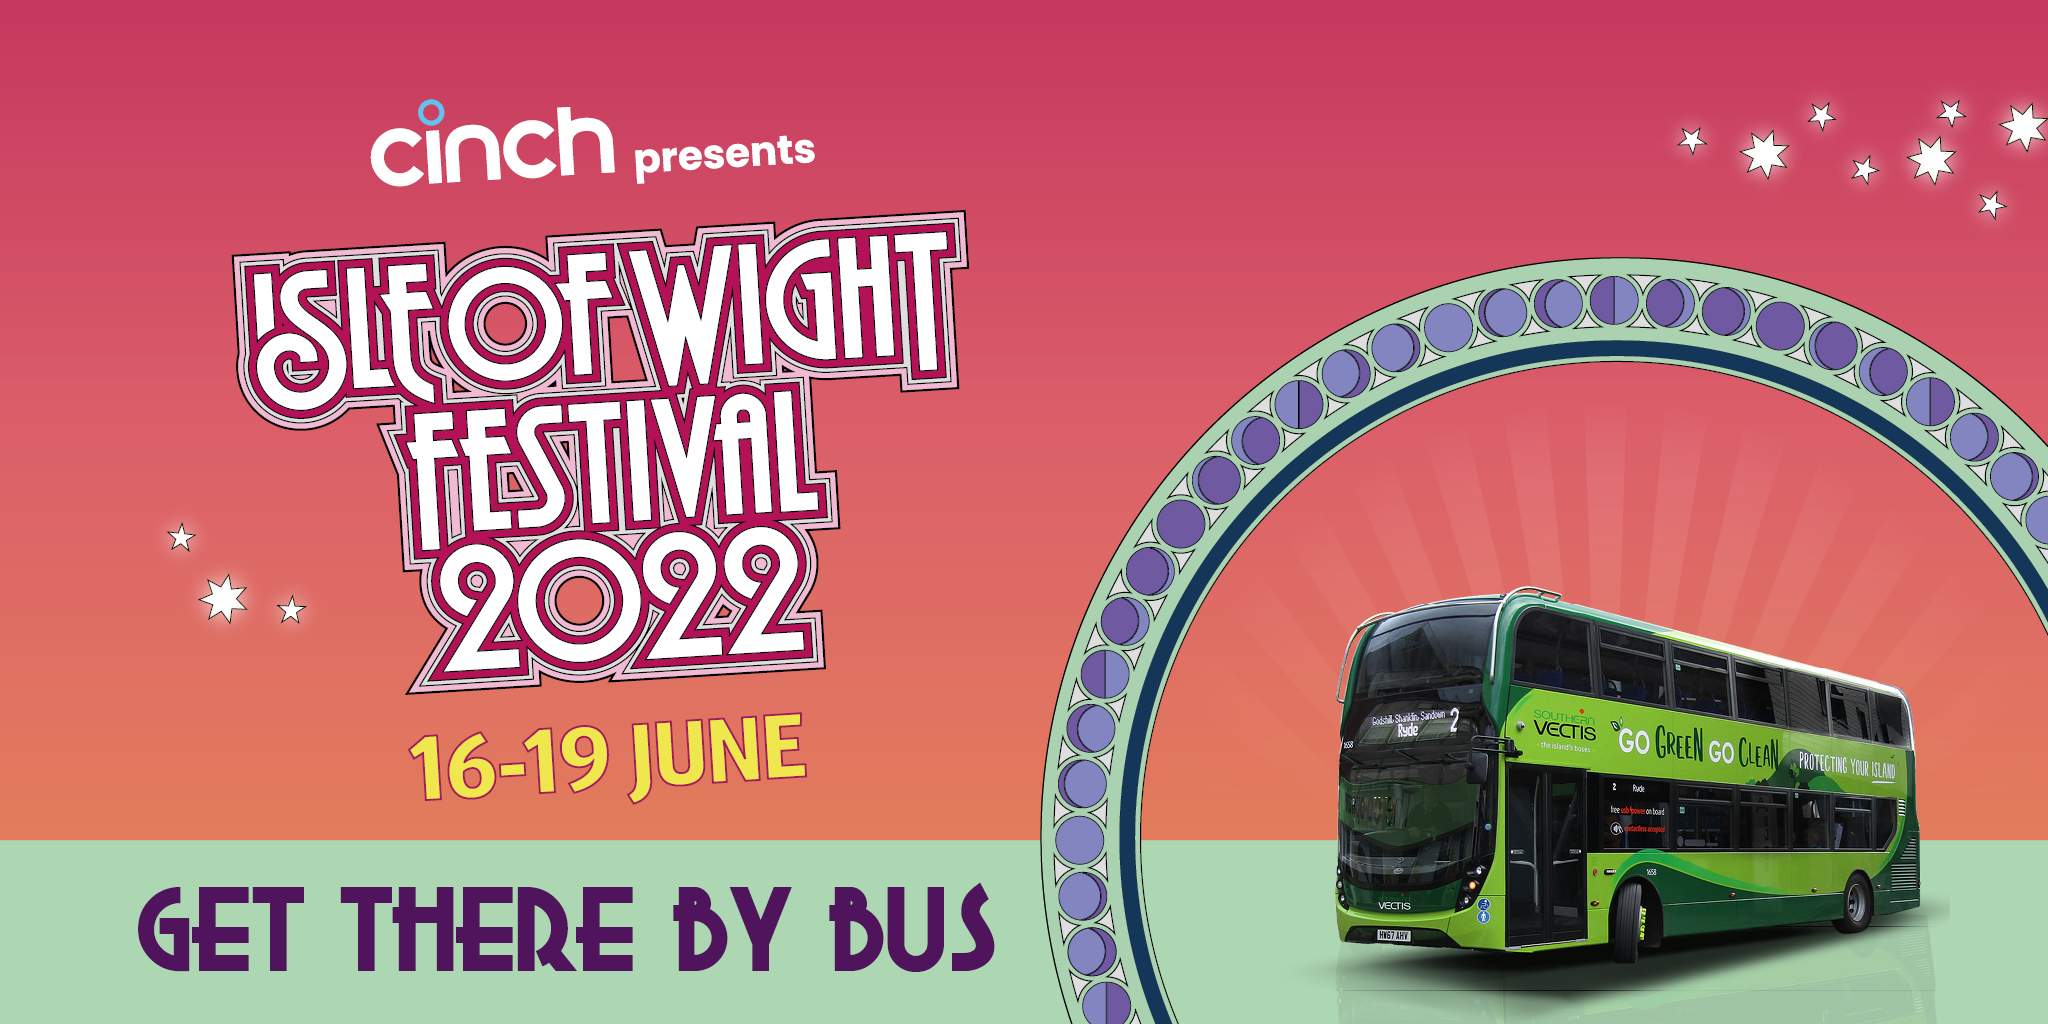 Isle of wight festival 2022